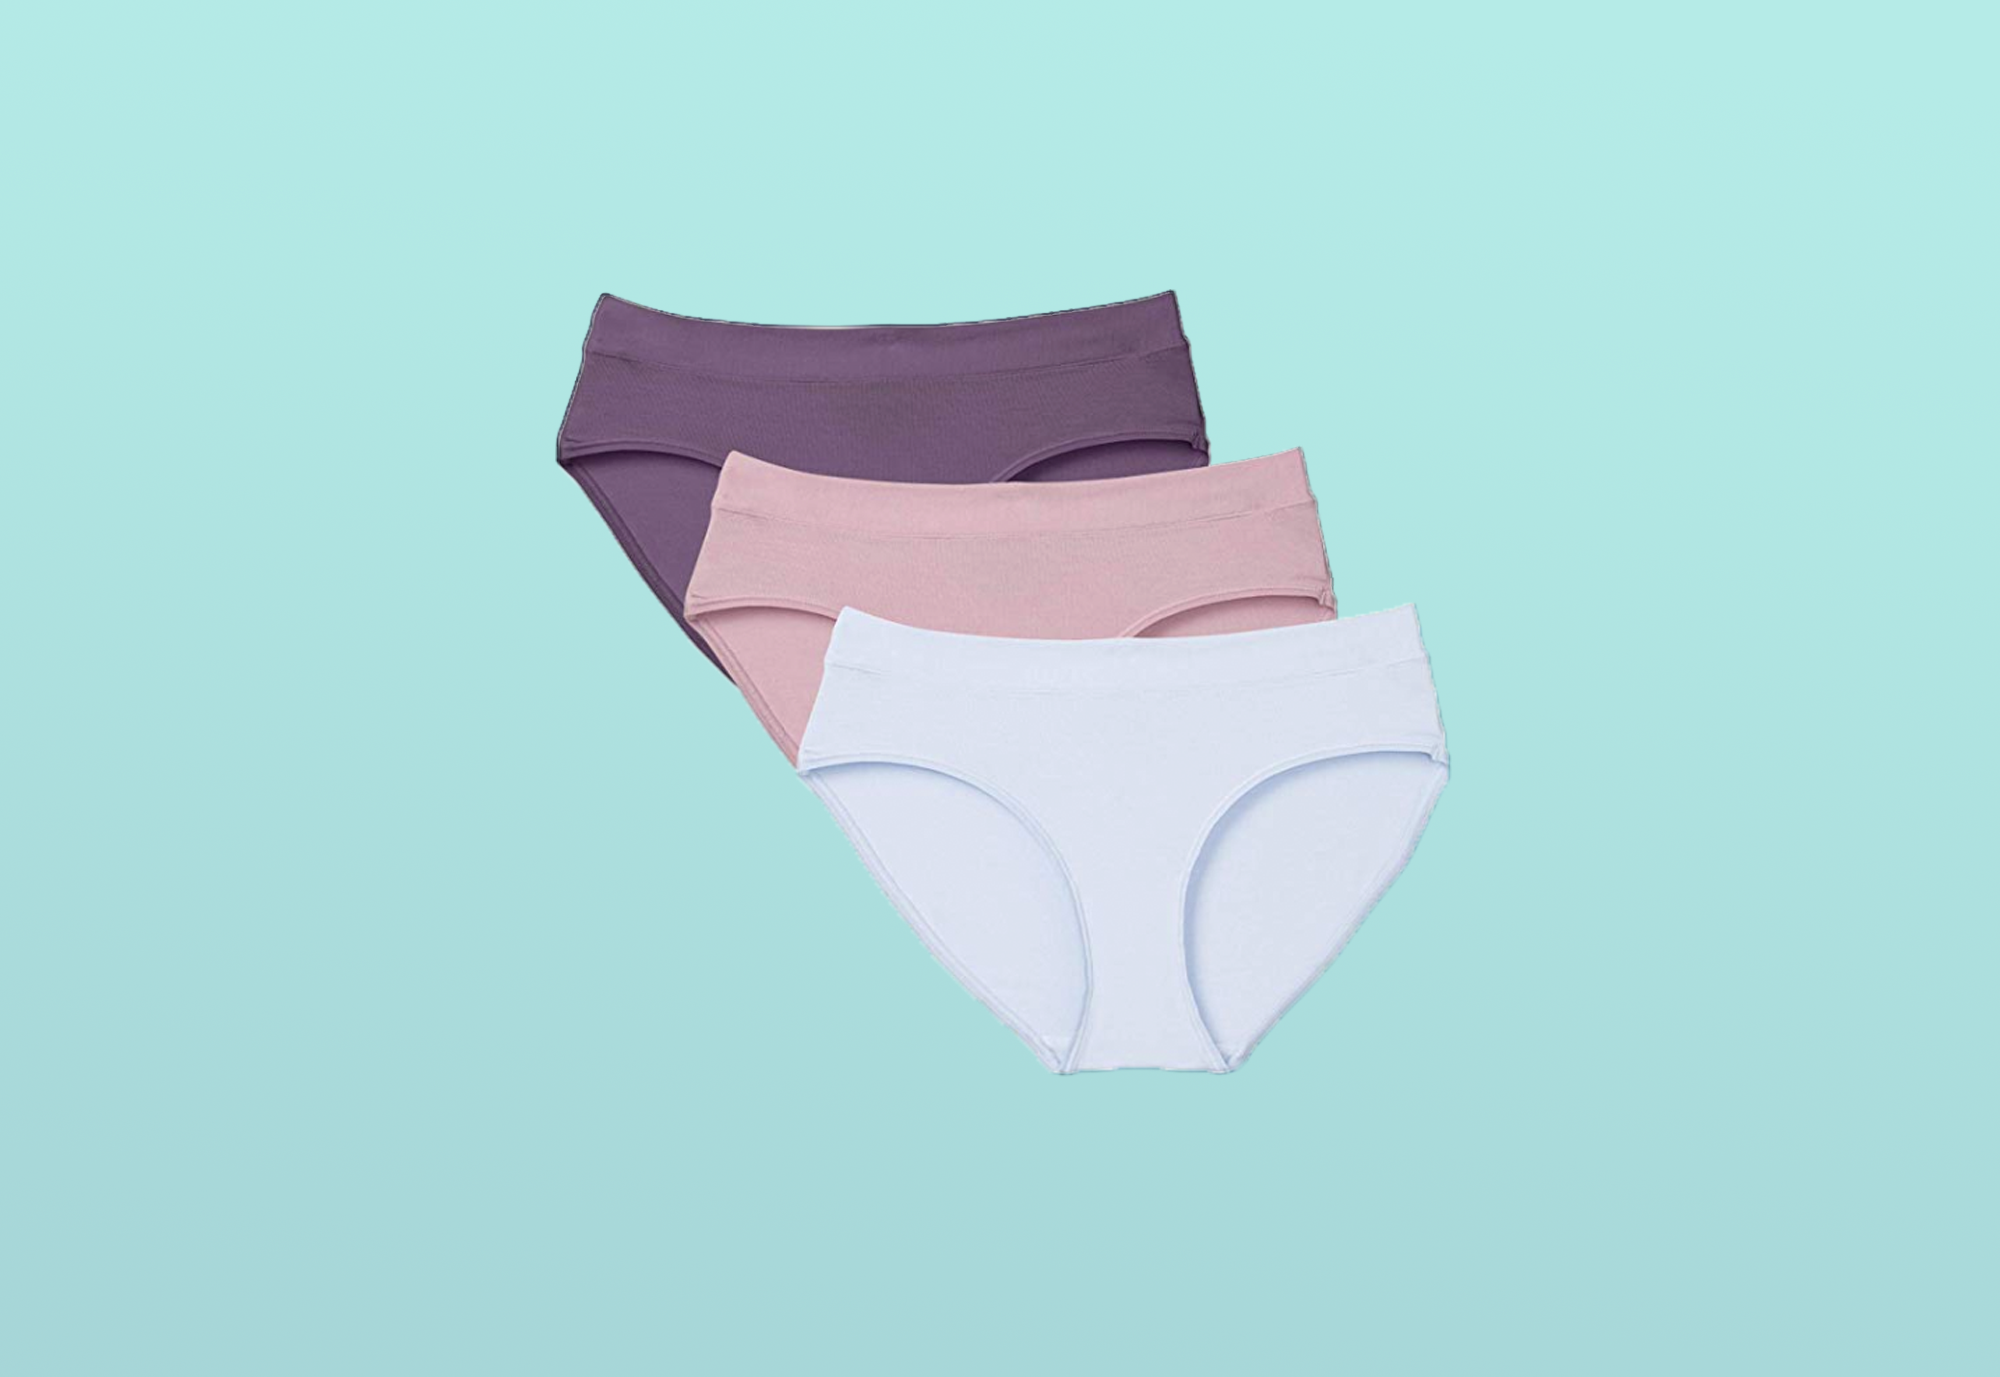 Victoria's Secret Lace Seamless Panties Knickers Briefs VS Lingerie Underwear UK